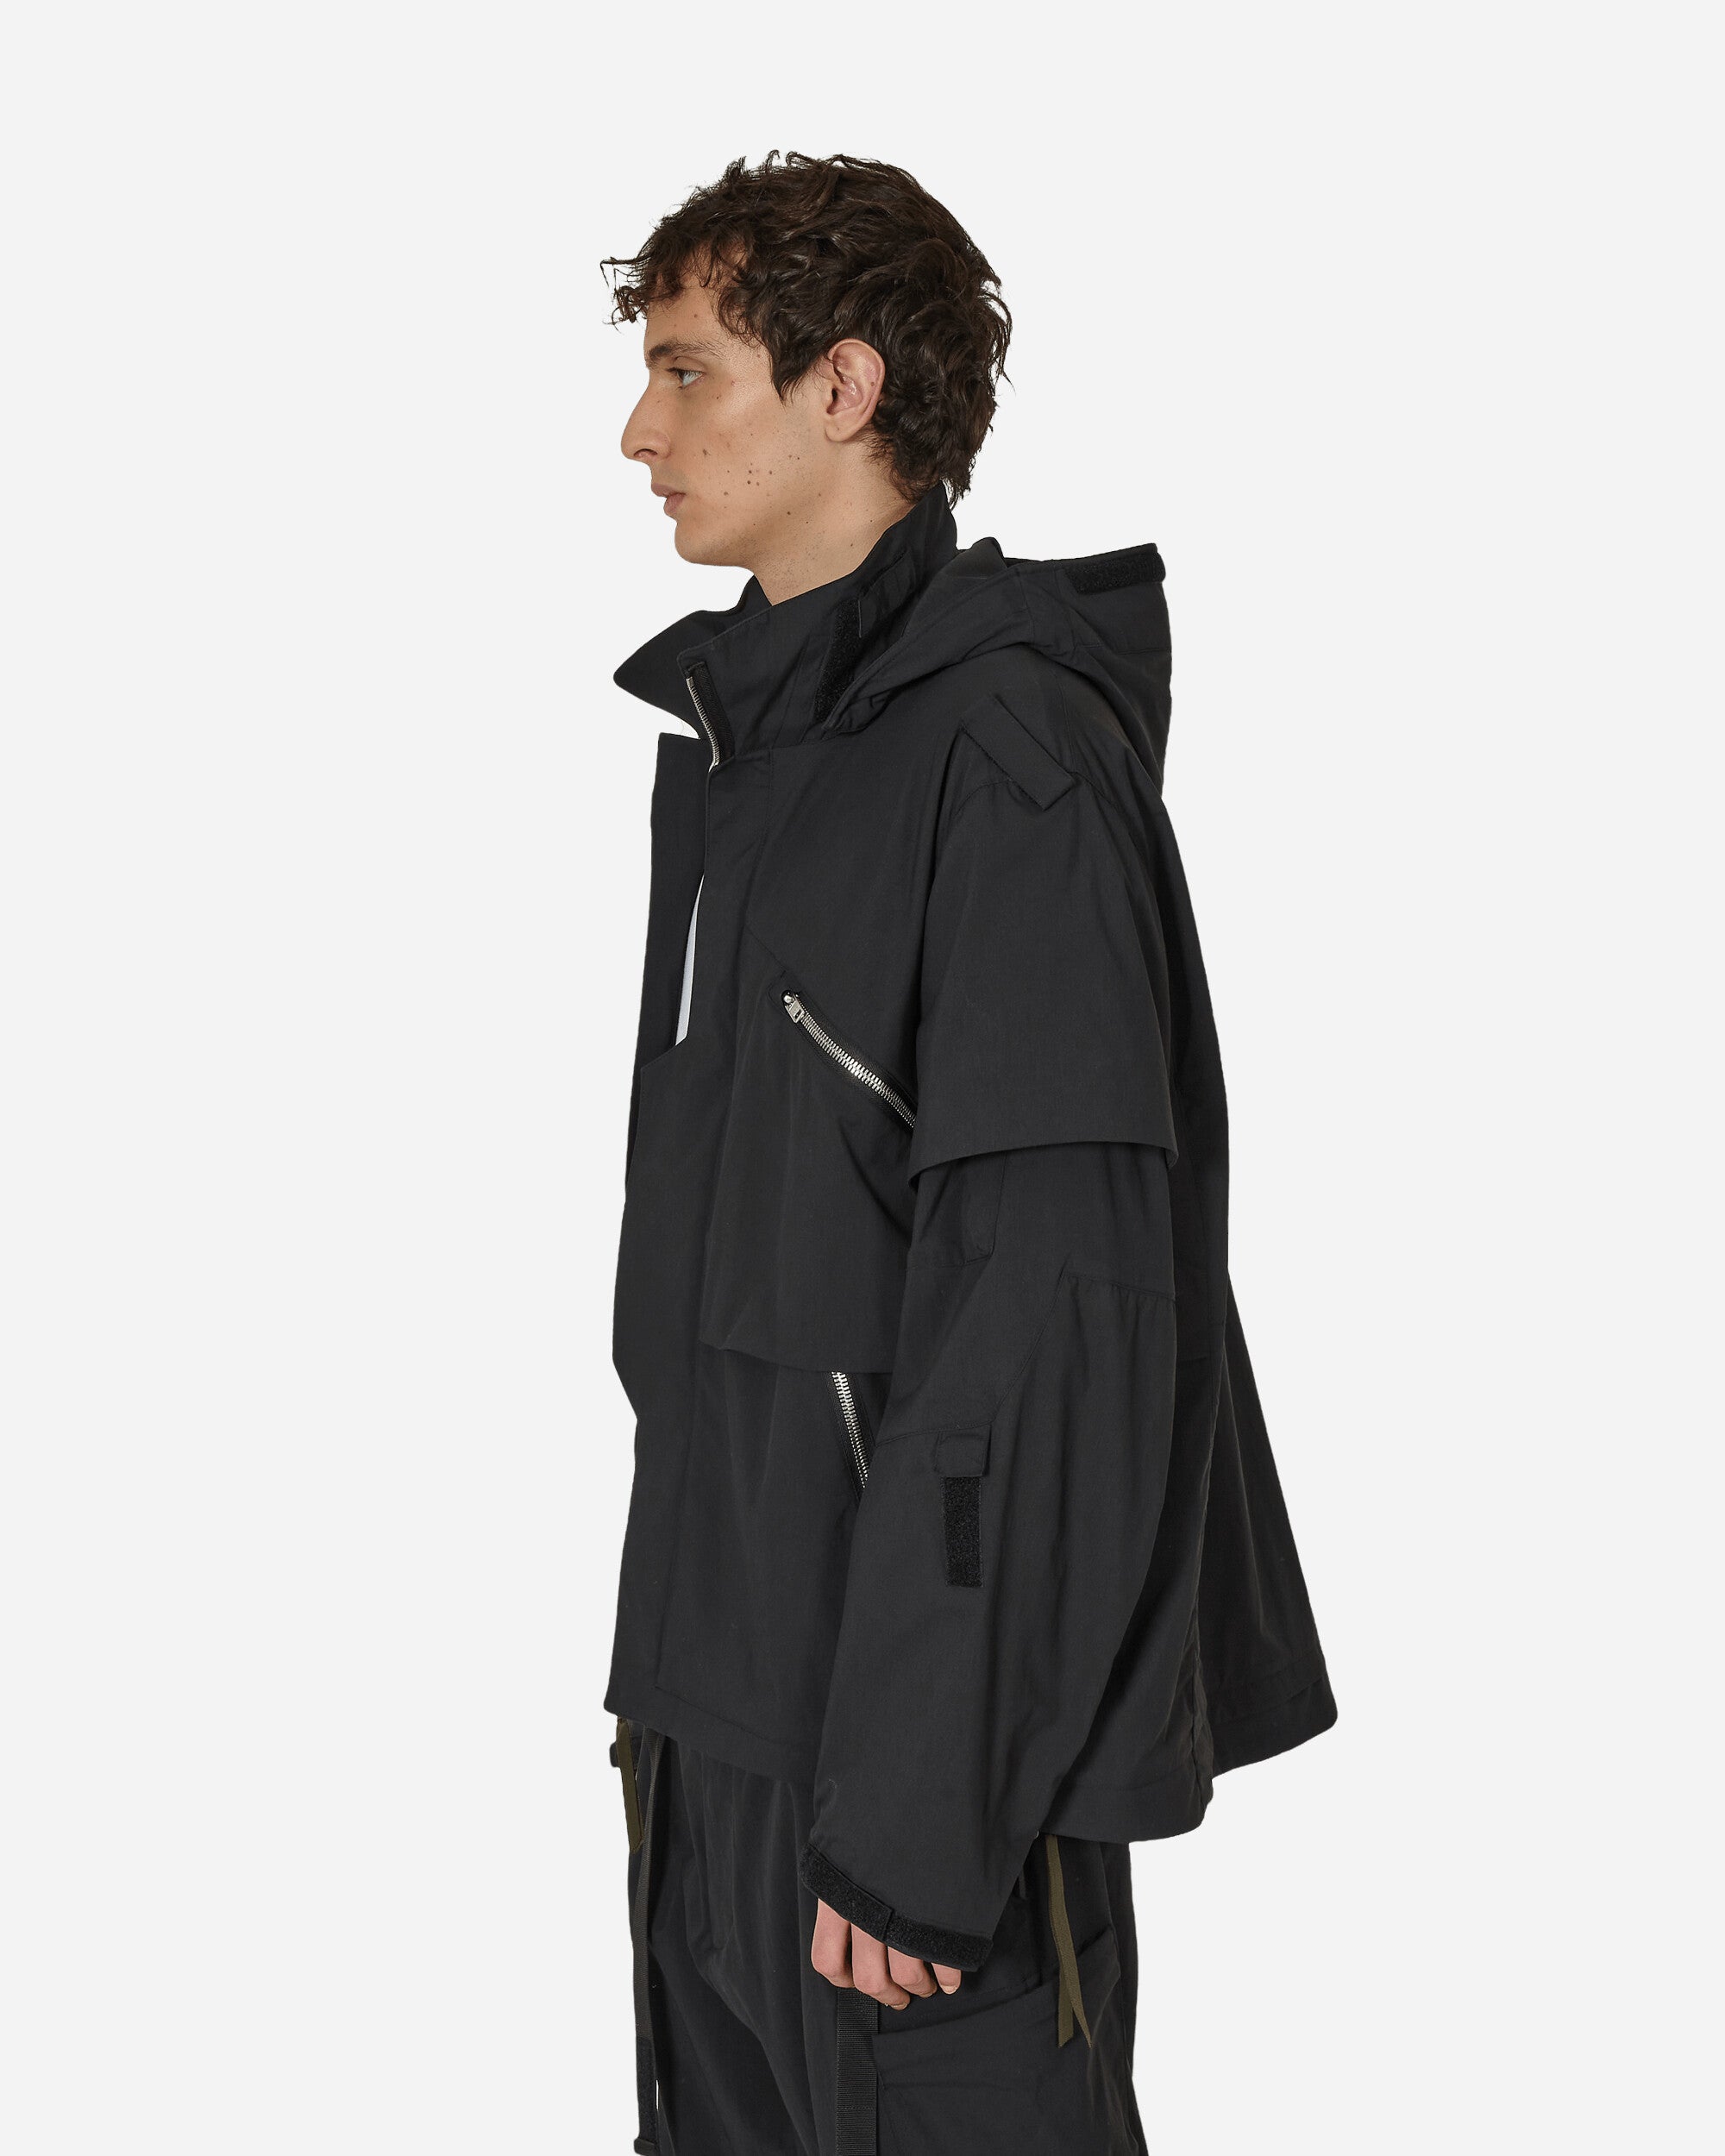 Acronym Encapsulated Nylon Interops Jacket Black Coats and Jackets Jackets J1WB-E 1